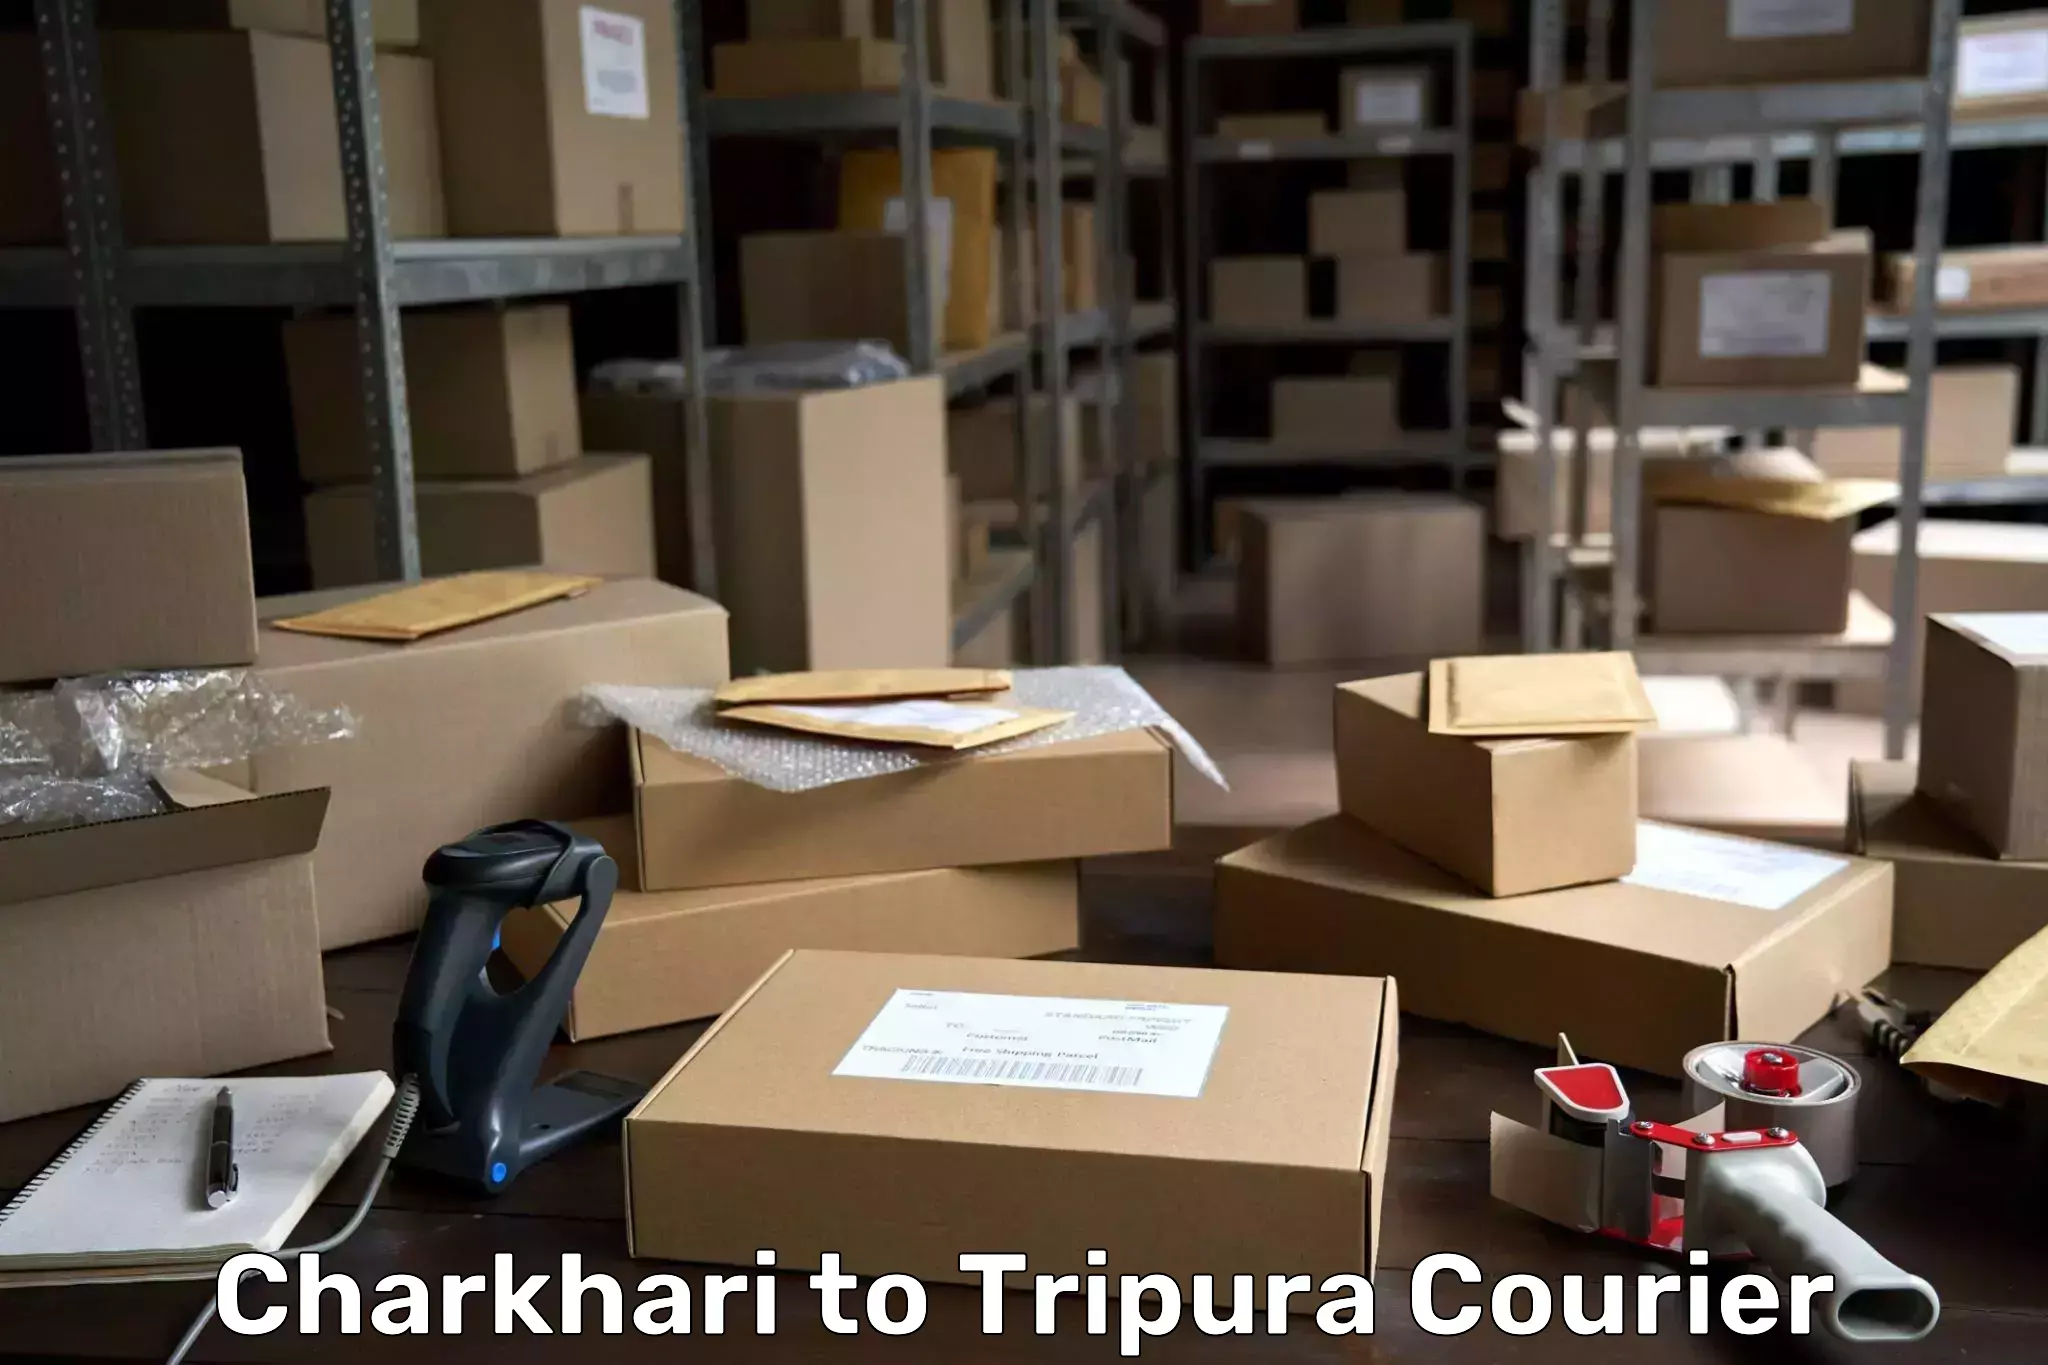 High-speed parcel service Charkhari to Udaipur Tripura